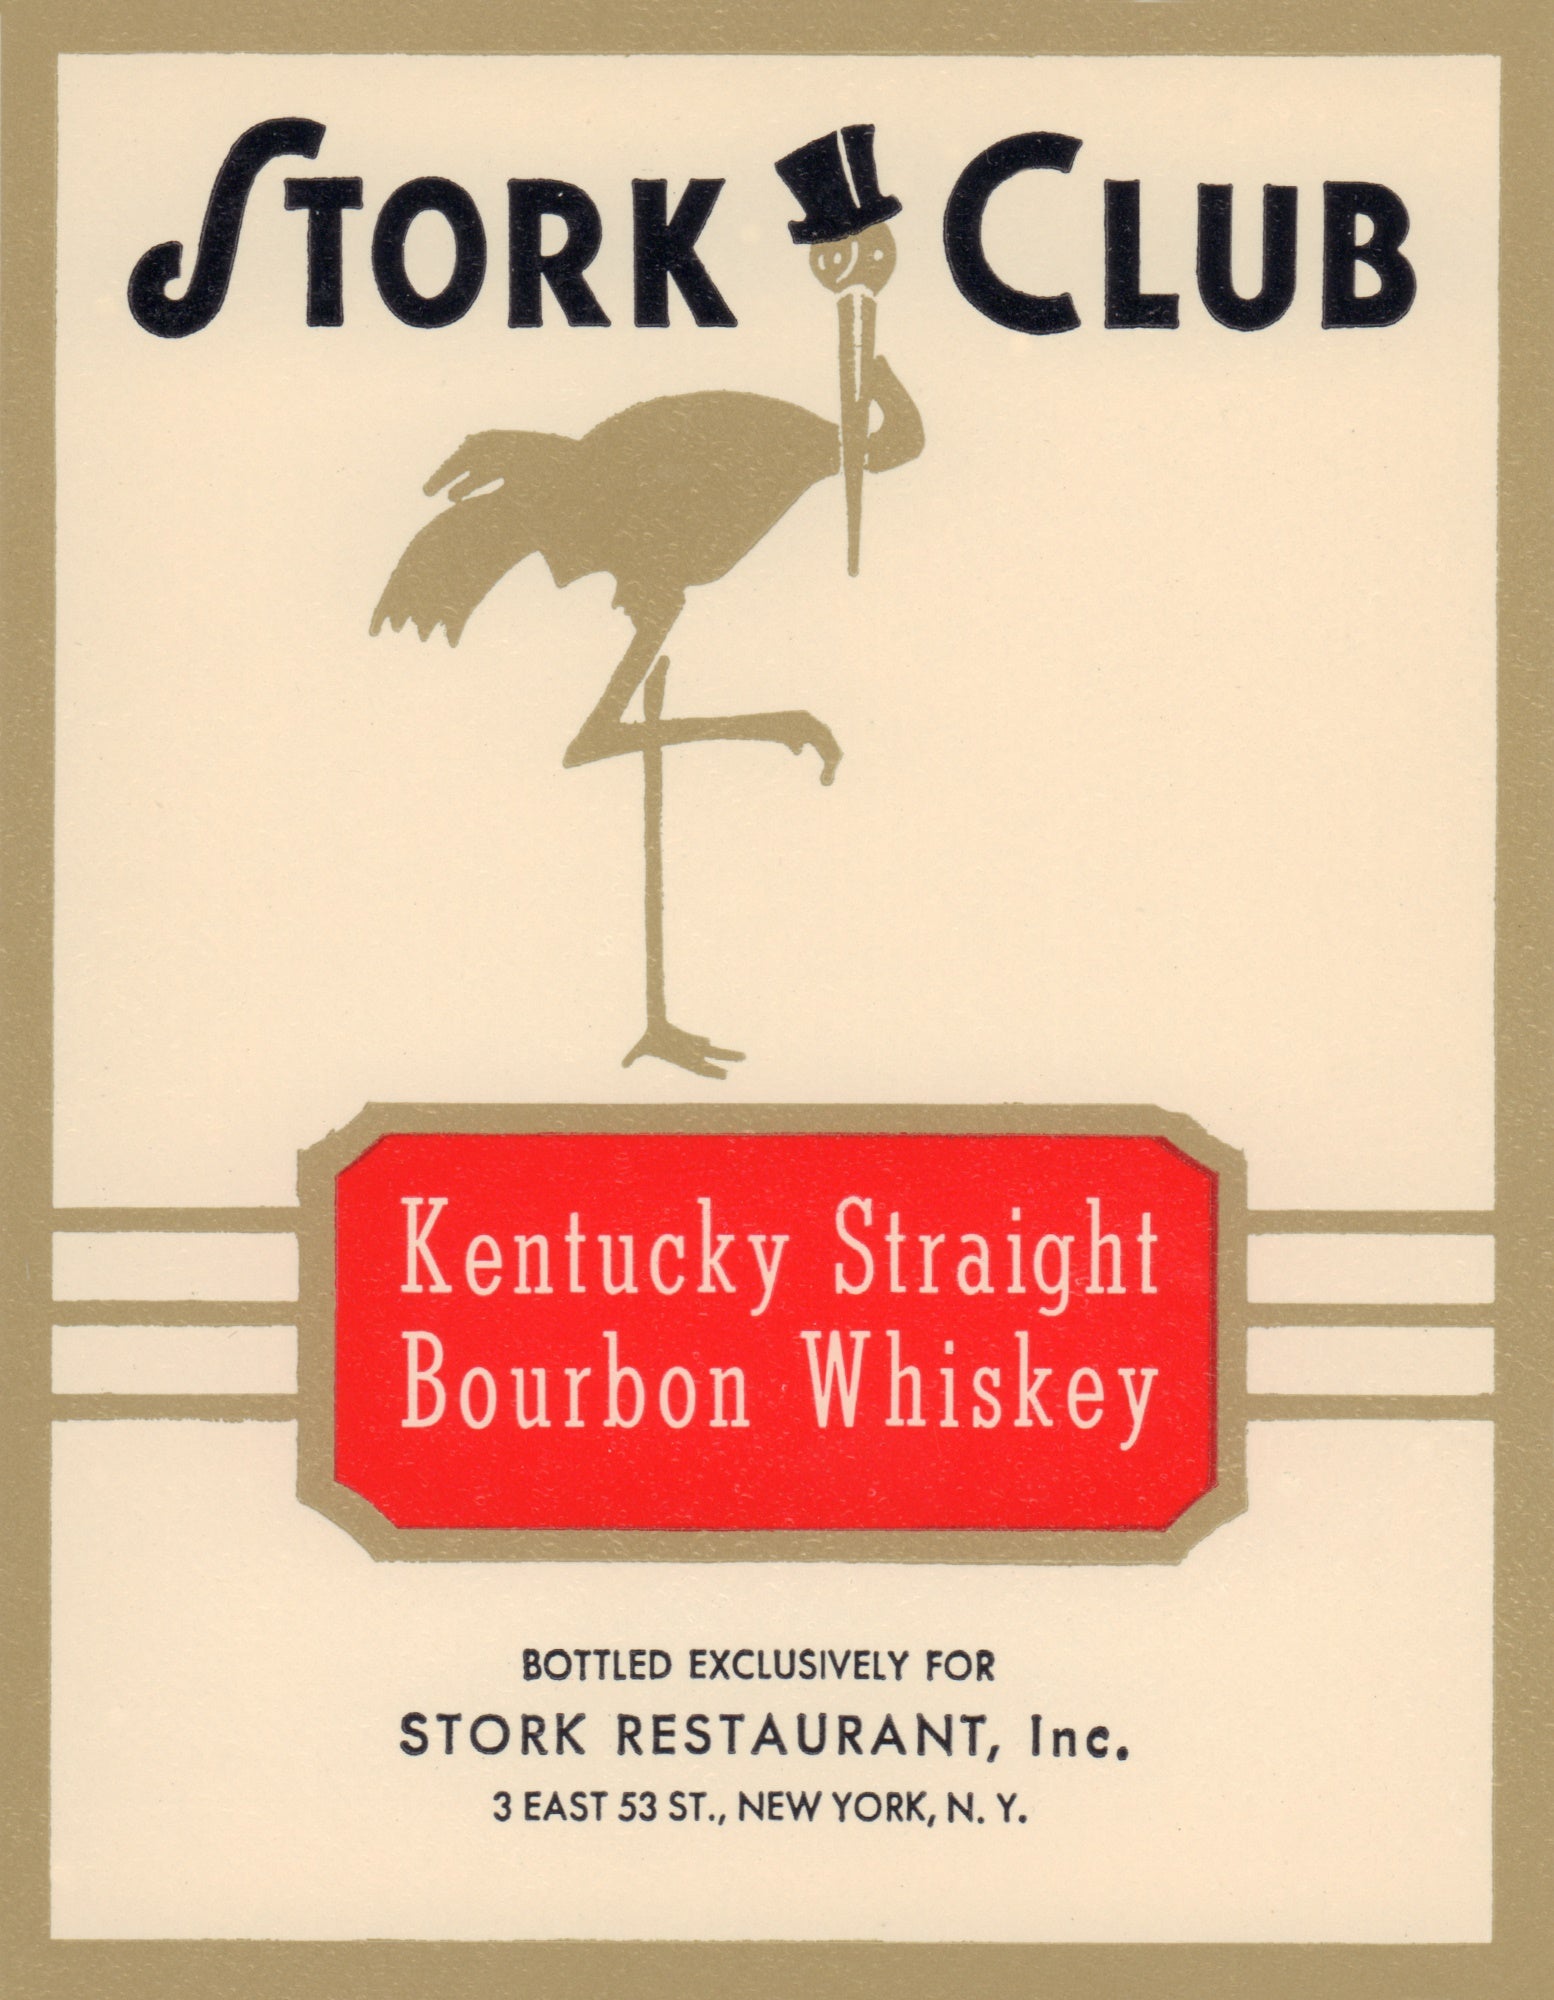 Stork Club Liquor Label - Kentucky Straight Bourbon Whiskey 1940s